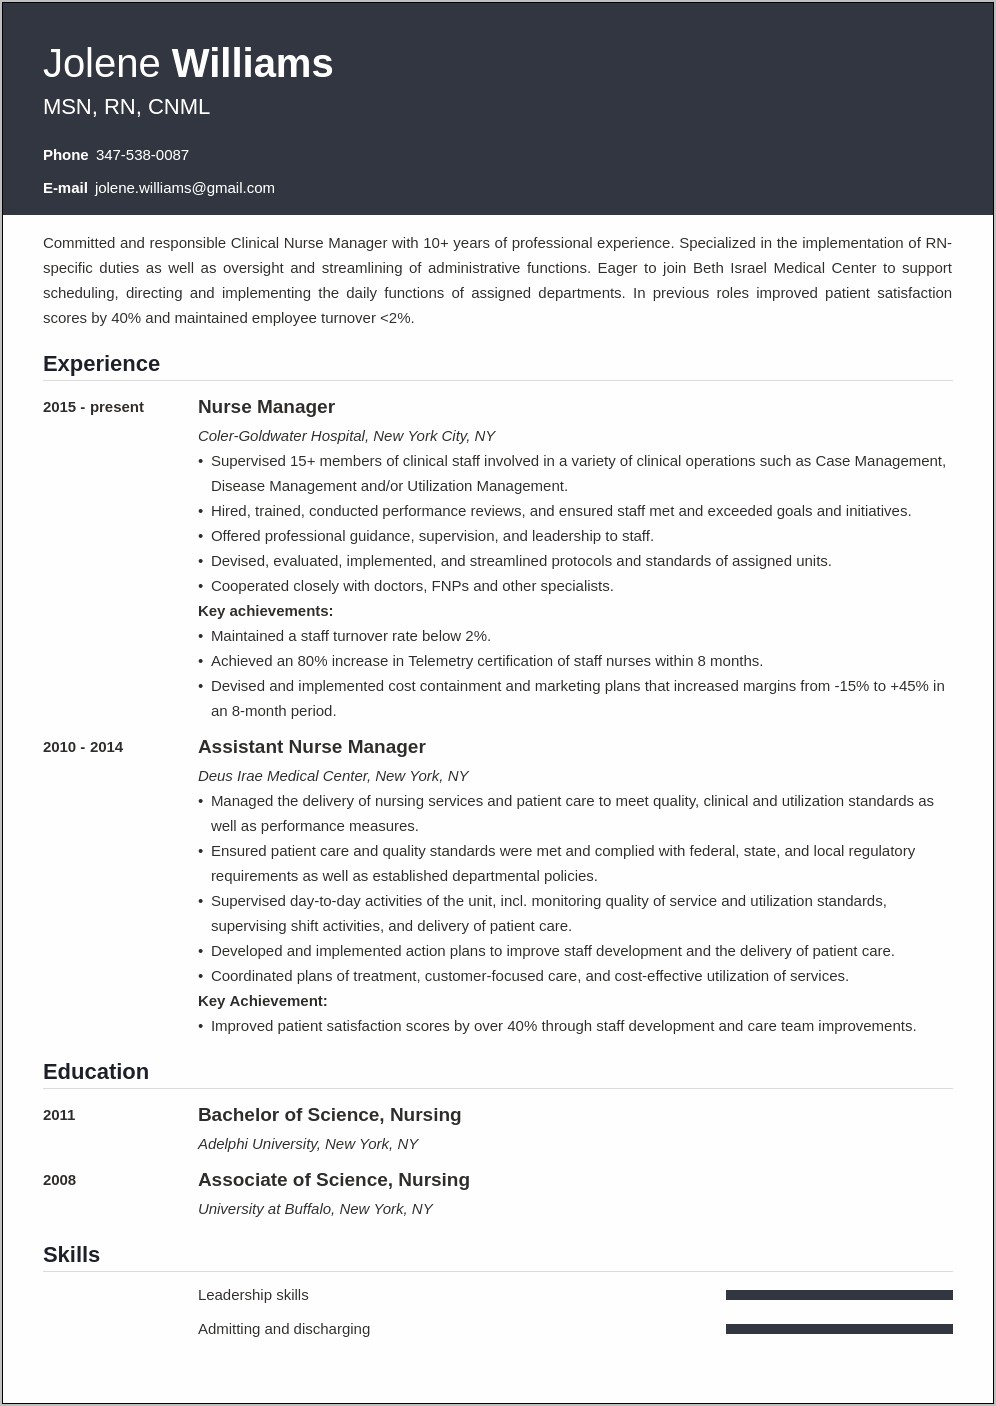 Resume Objective For Nursing Leadership